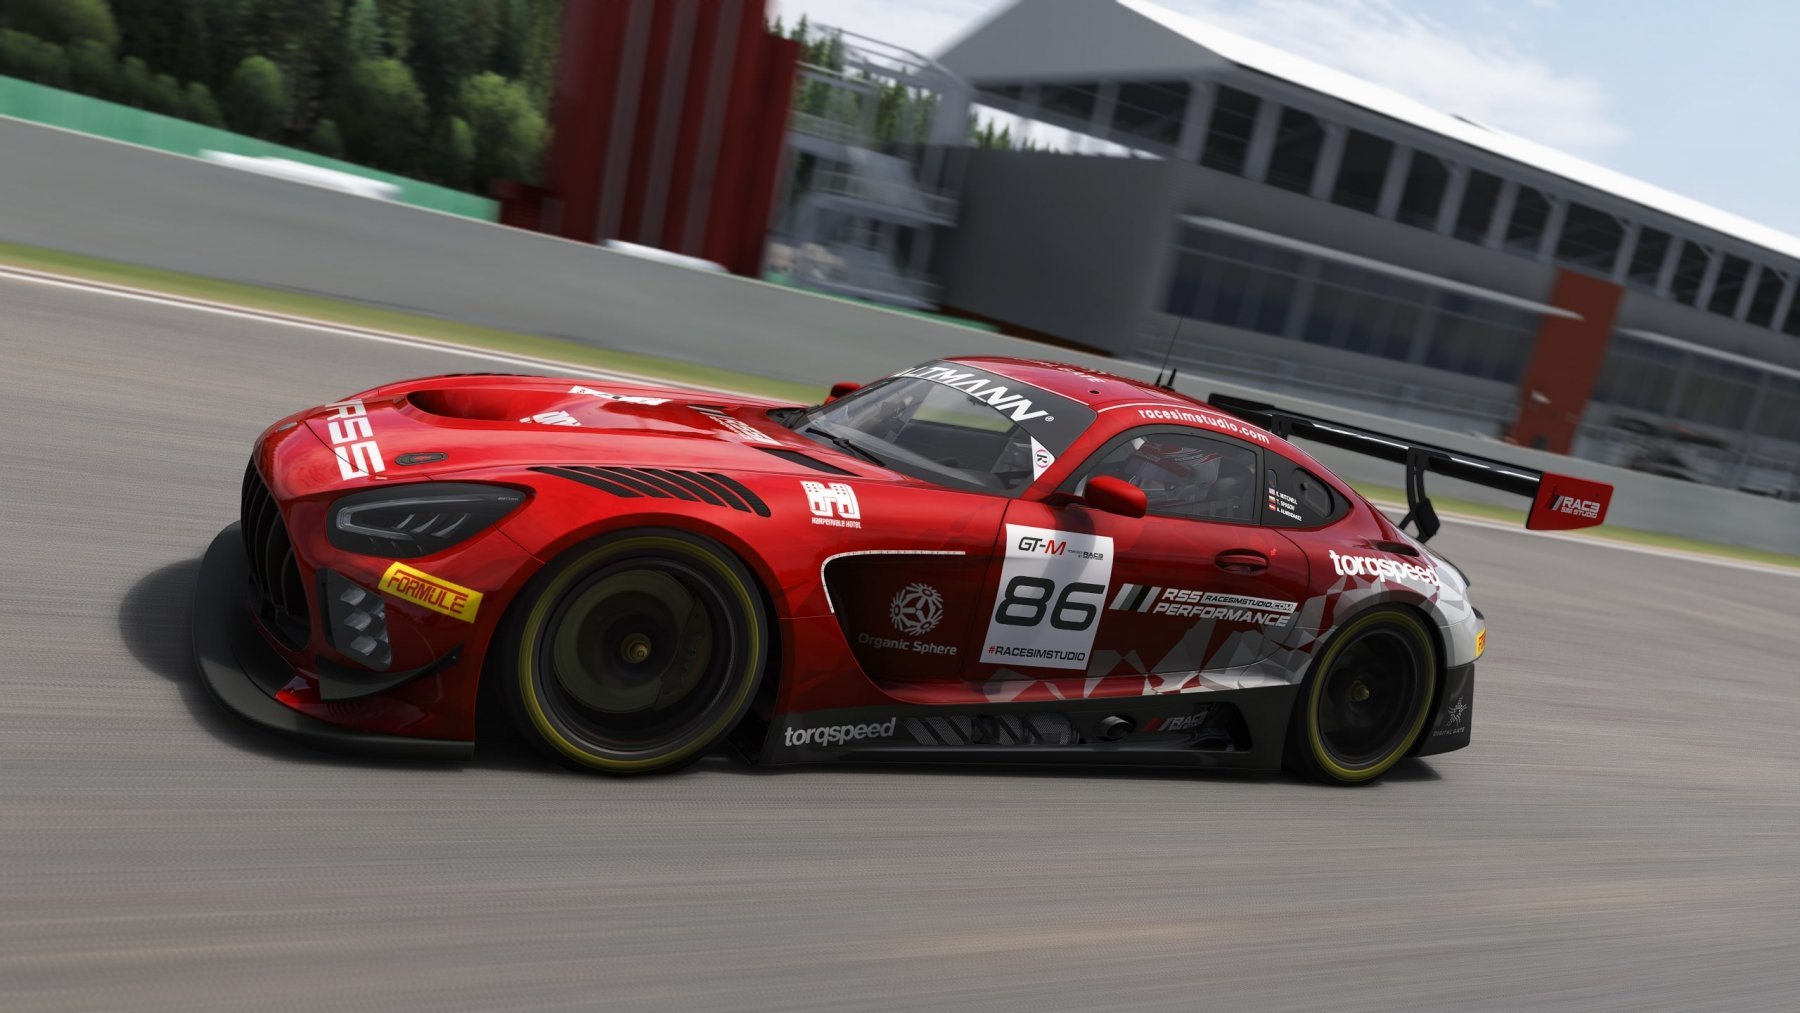 More information about "Assetto Corsa: nuova GT-M Mercer V8 e GT-M pack aggiornato by Race Sim Studio"